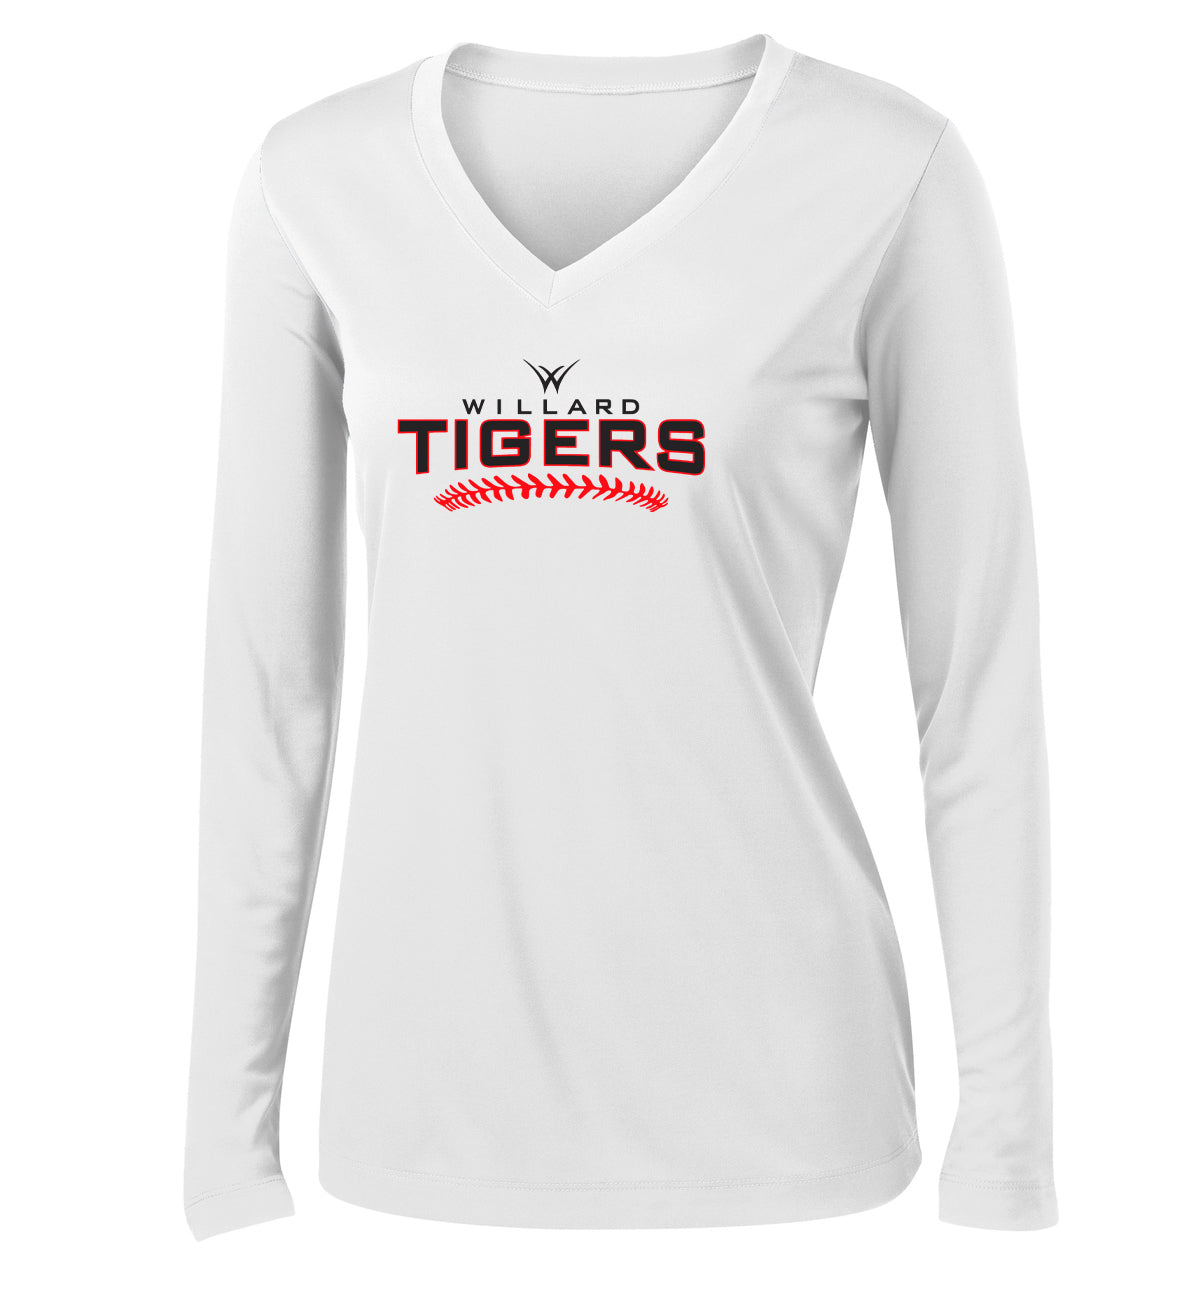 Willard Tigers Baseball Women's Long Sleeve Performance Shirt